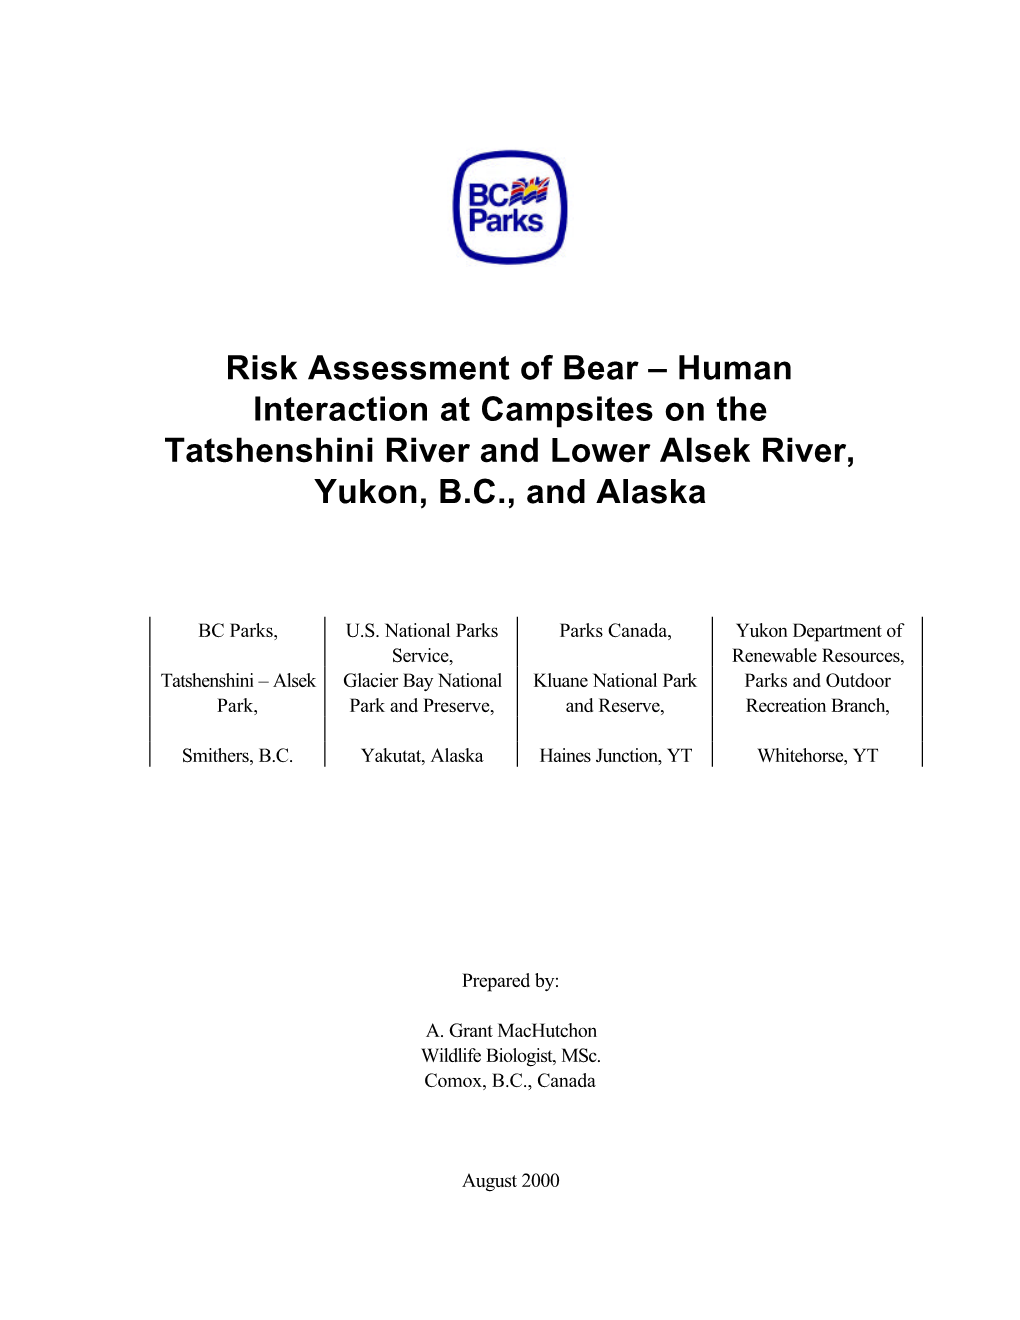 Risk Assessment of Bear – Human Interaction at Campsites on the Tatshenshini River and Lower Alsek River, Yukon, B.C., and Alaska